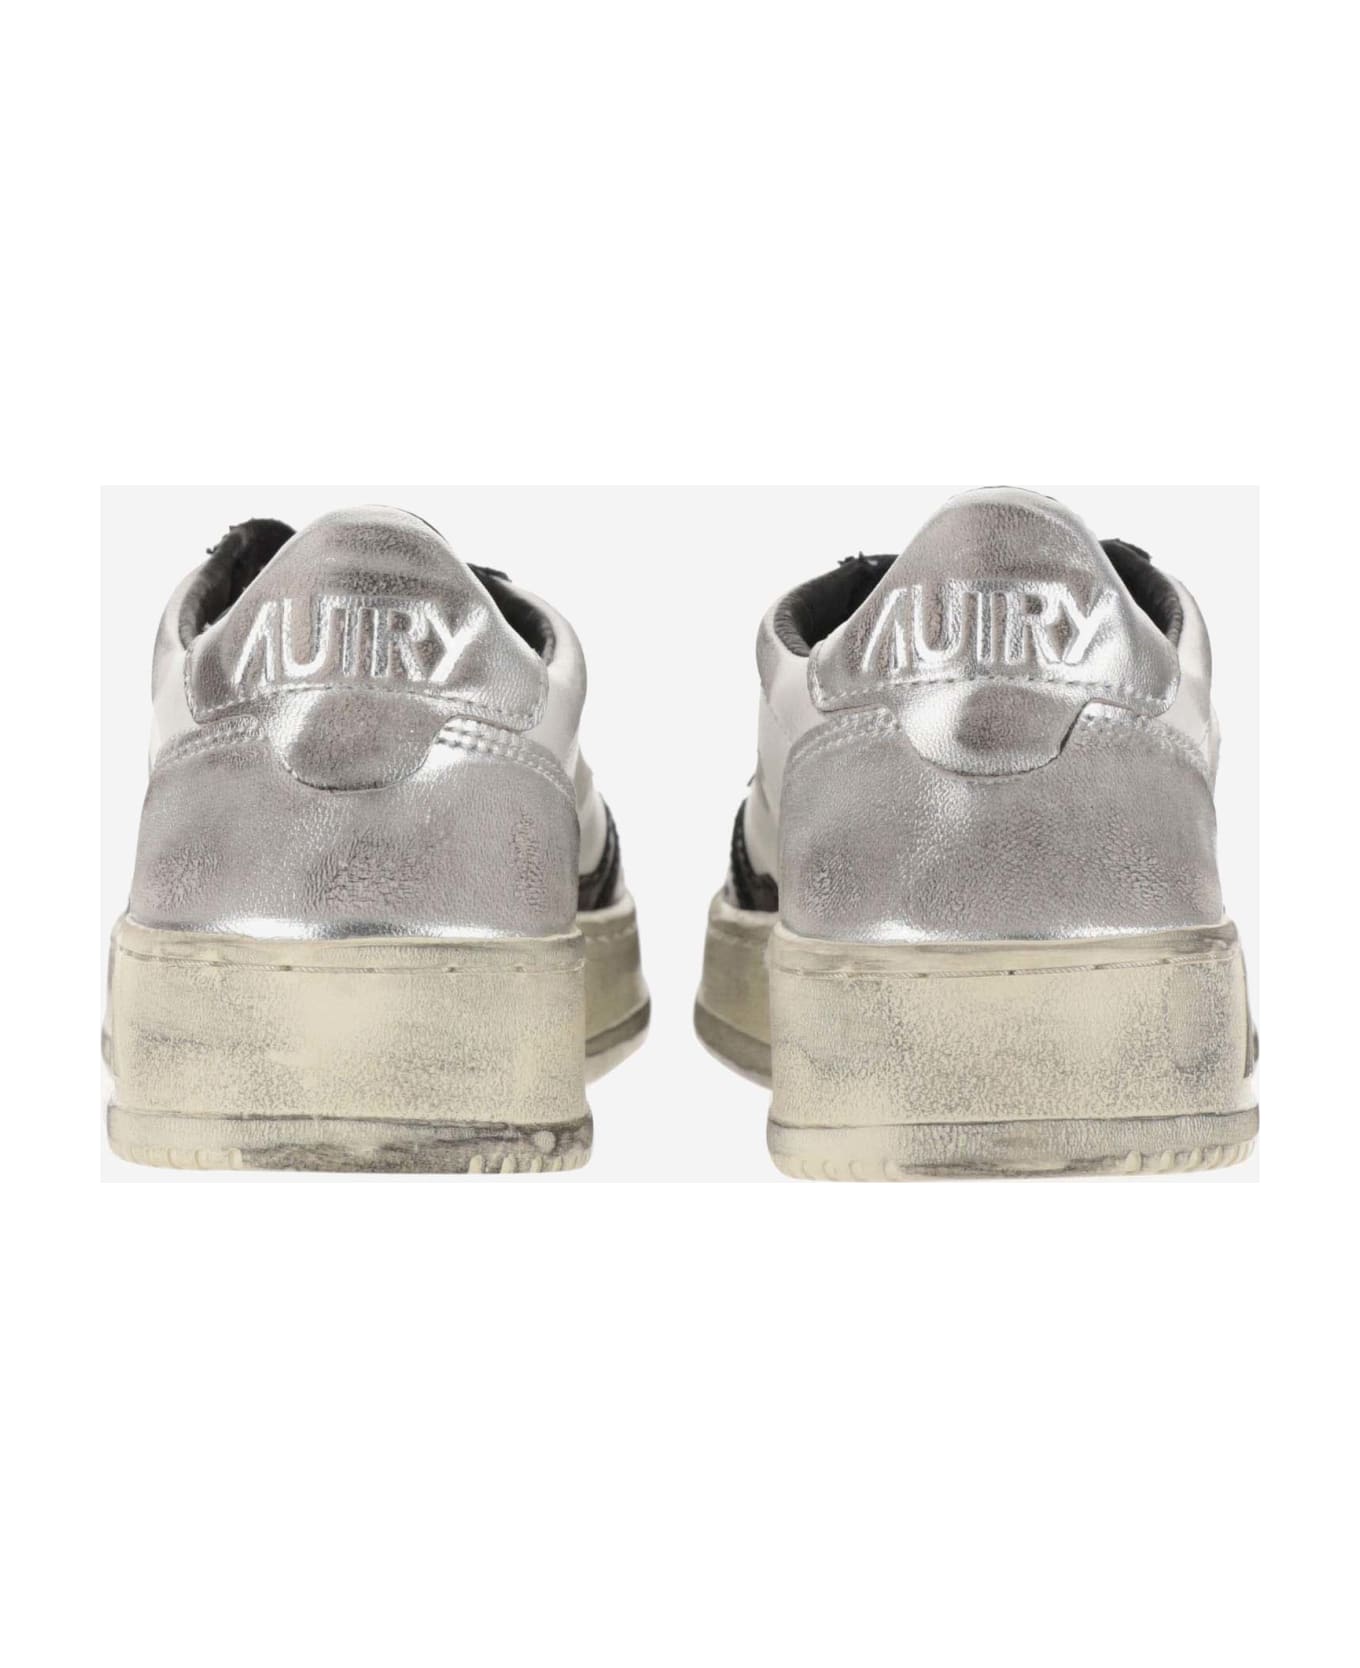 Autry Super Vintage Color-block Sneakers - Bianco/Nero